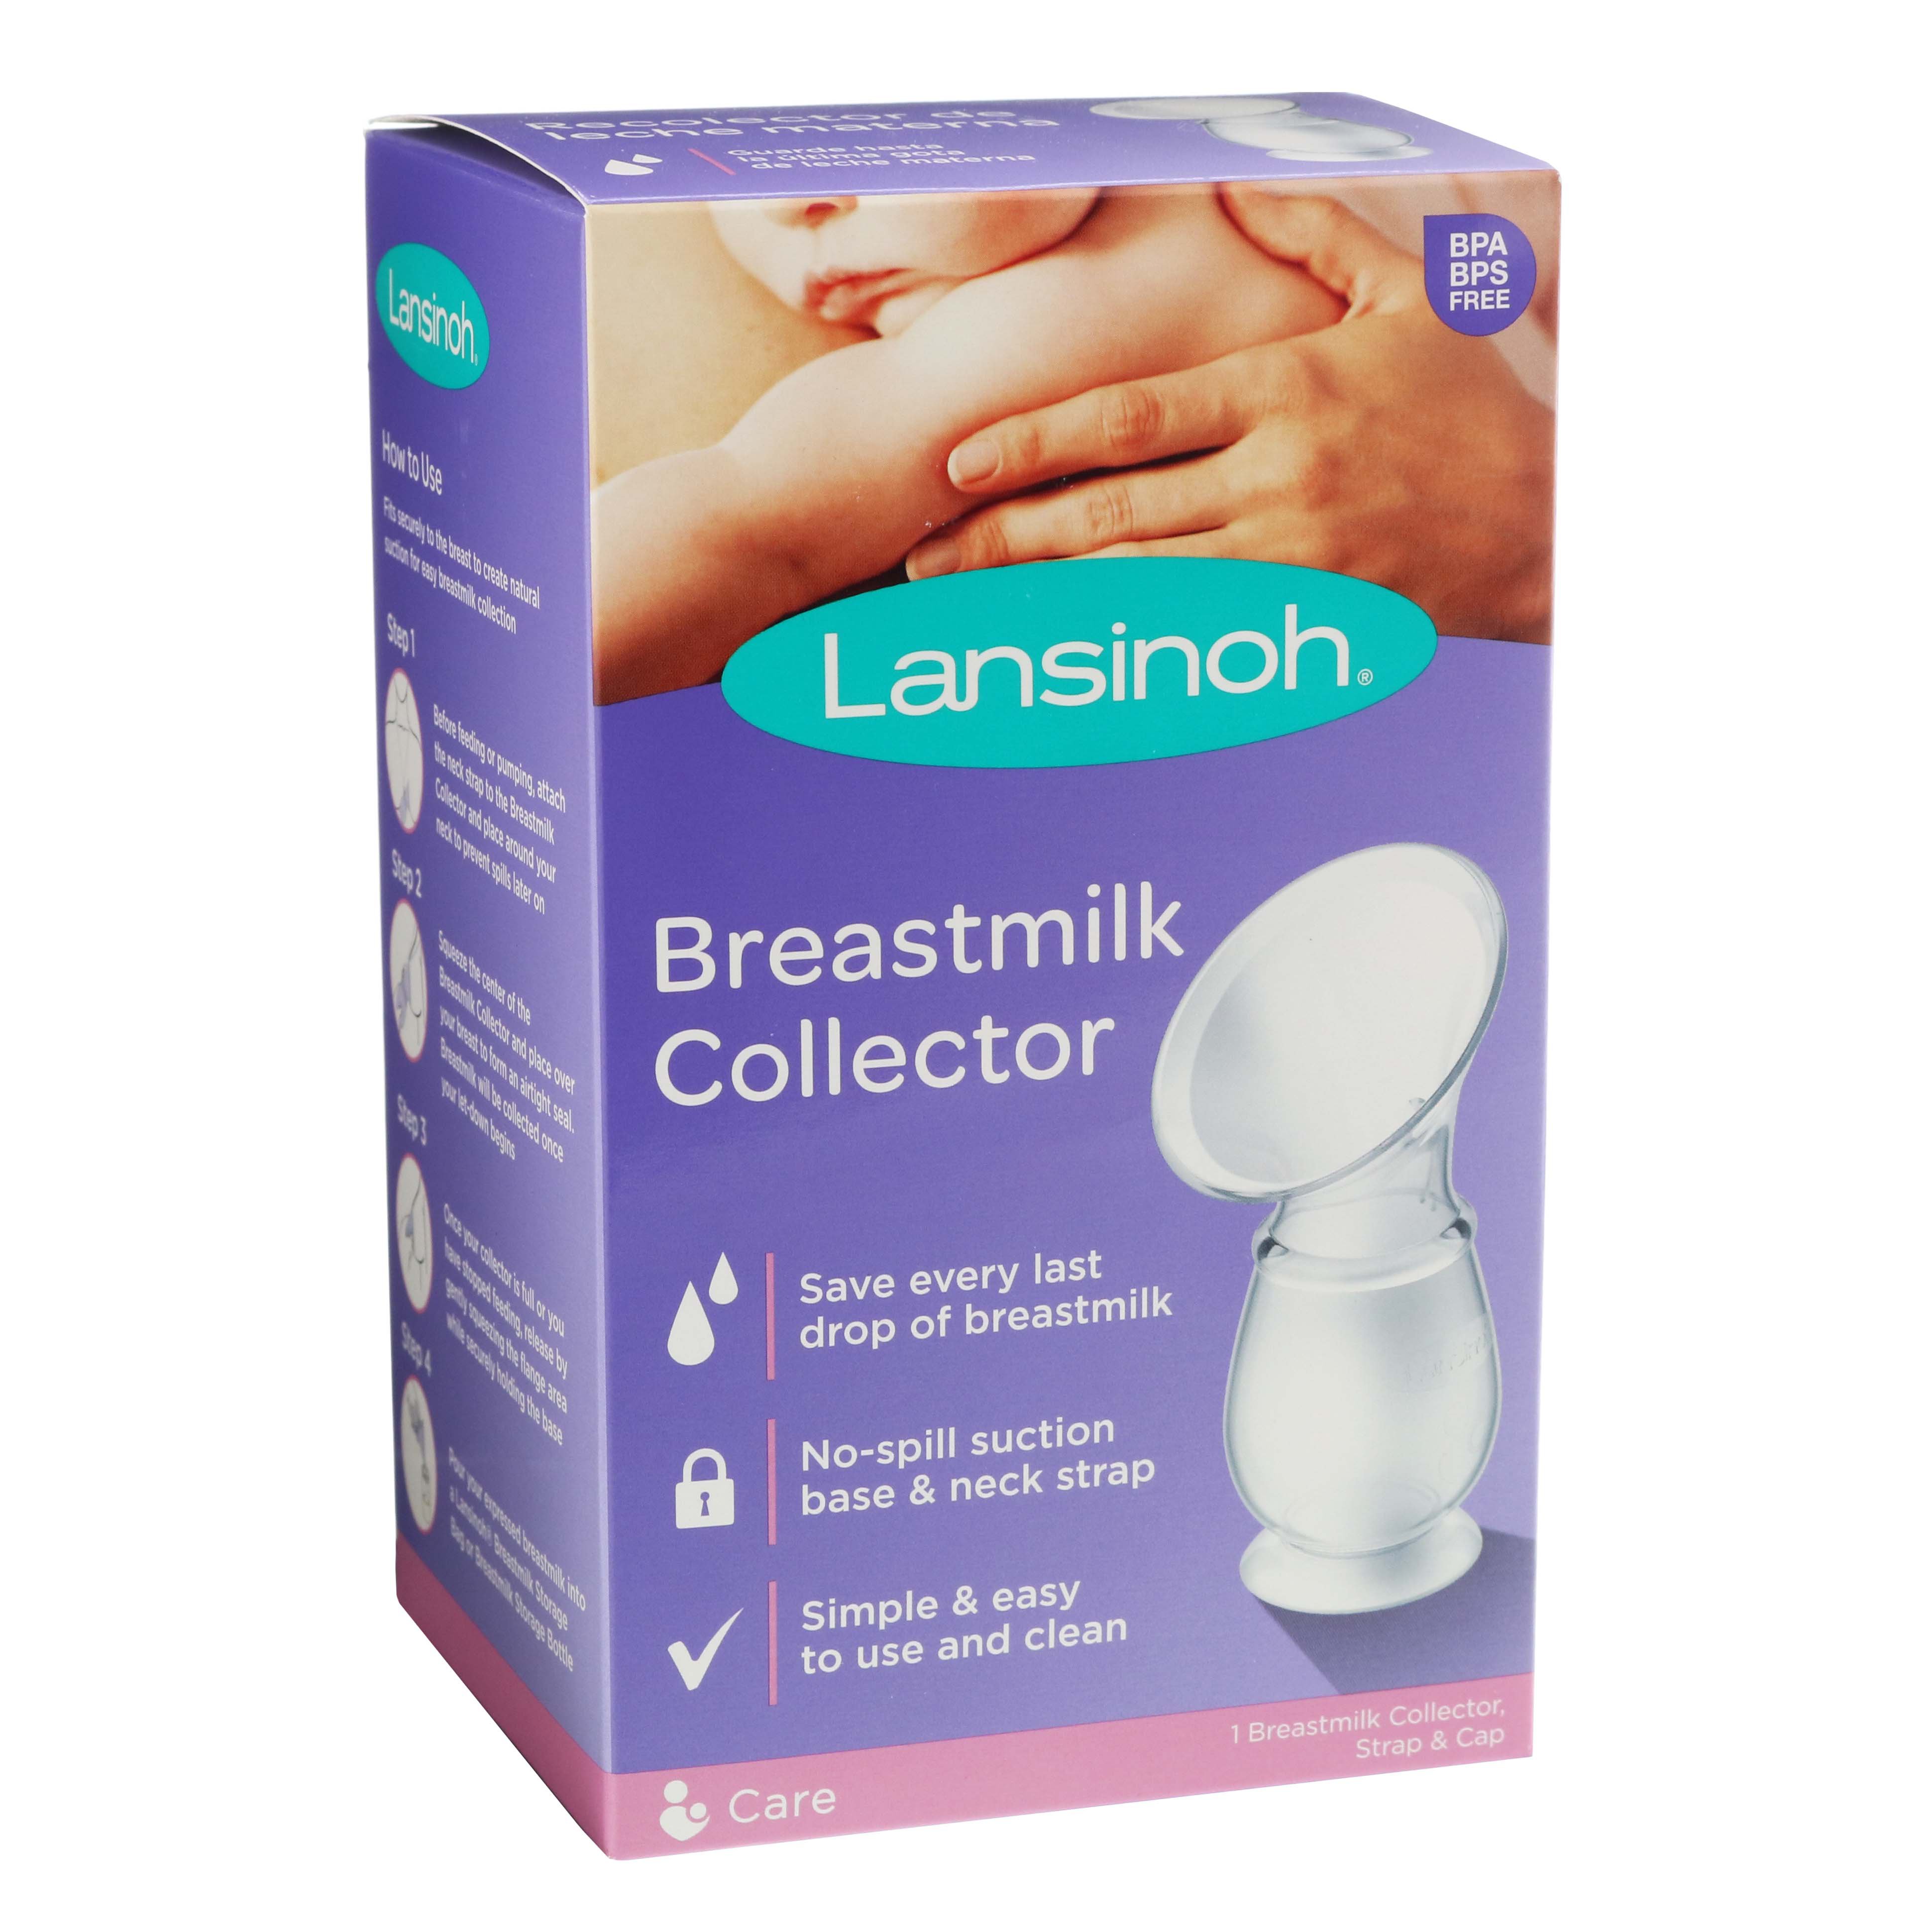 Lansinoh Nipple Cream - Shop Body Lotion at H-E-B